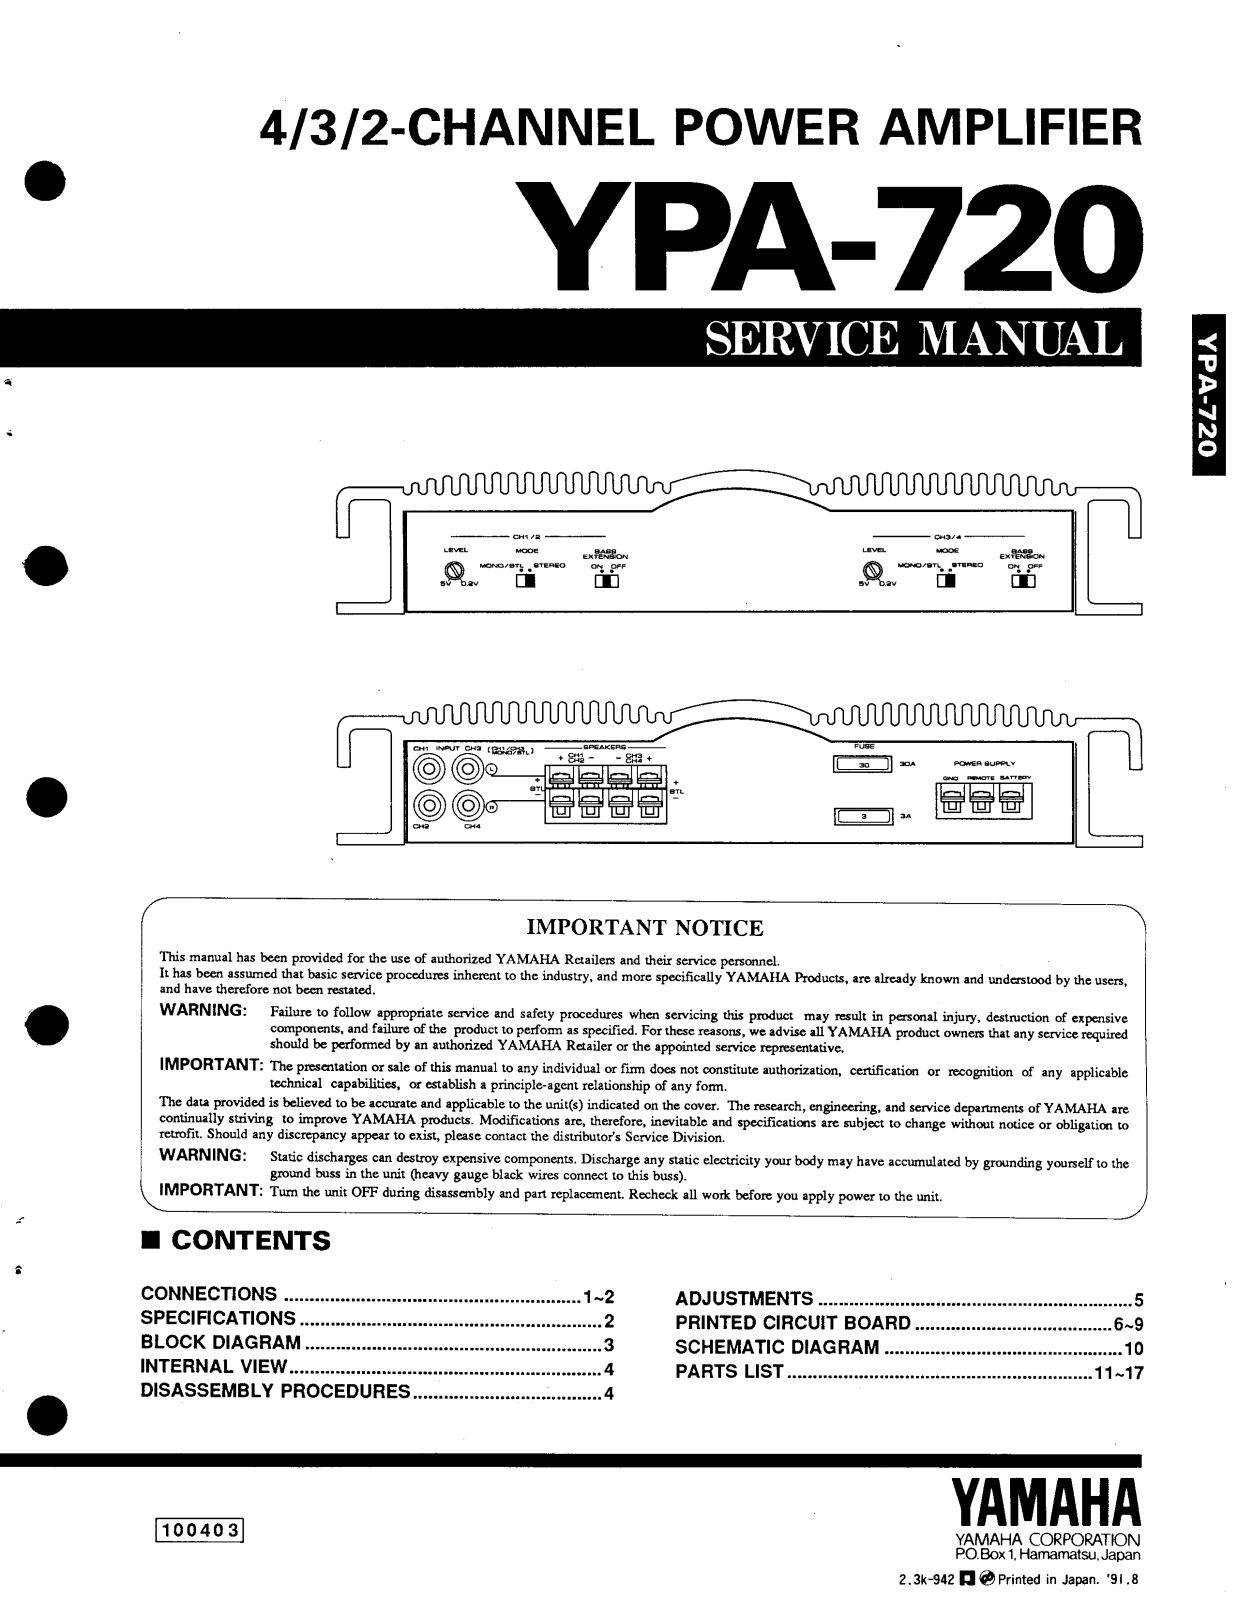 Yamaha YPA-720 Service manual